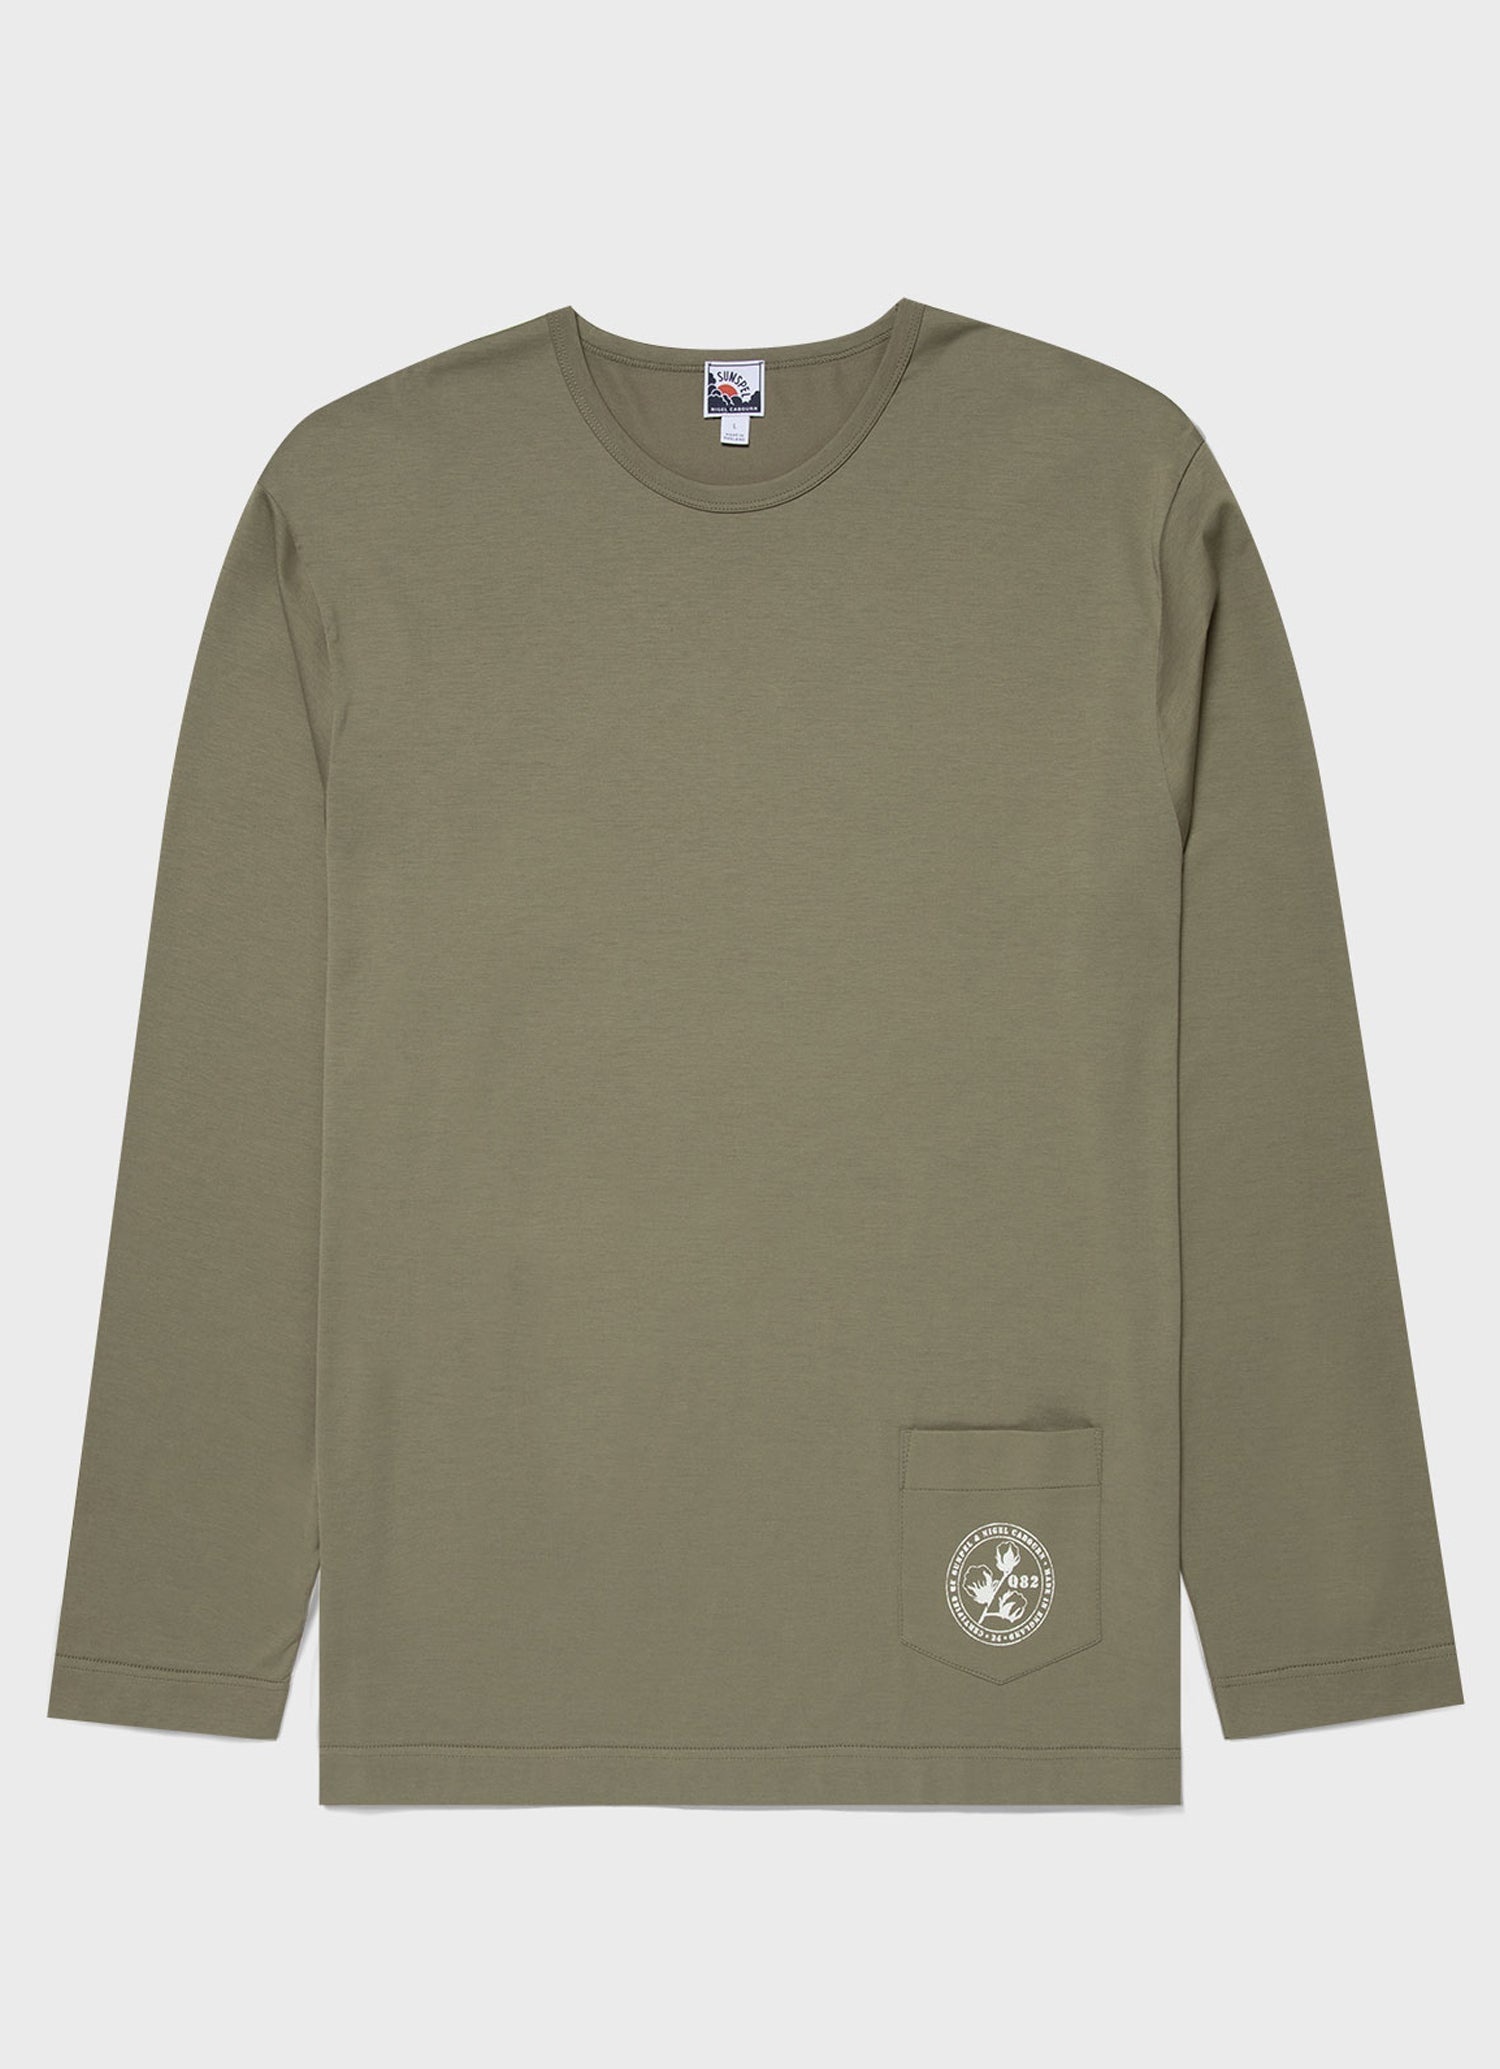 Nigel Cabourn x Sunspel Long Sleeve Pocket T-Shirt in Army Green - 1